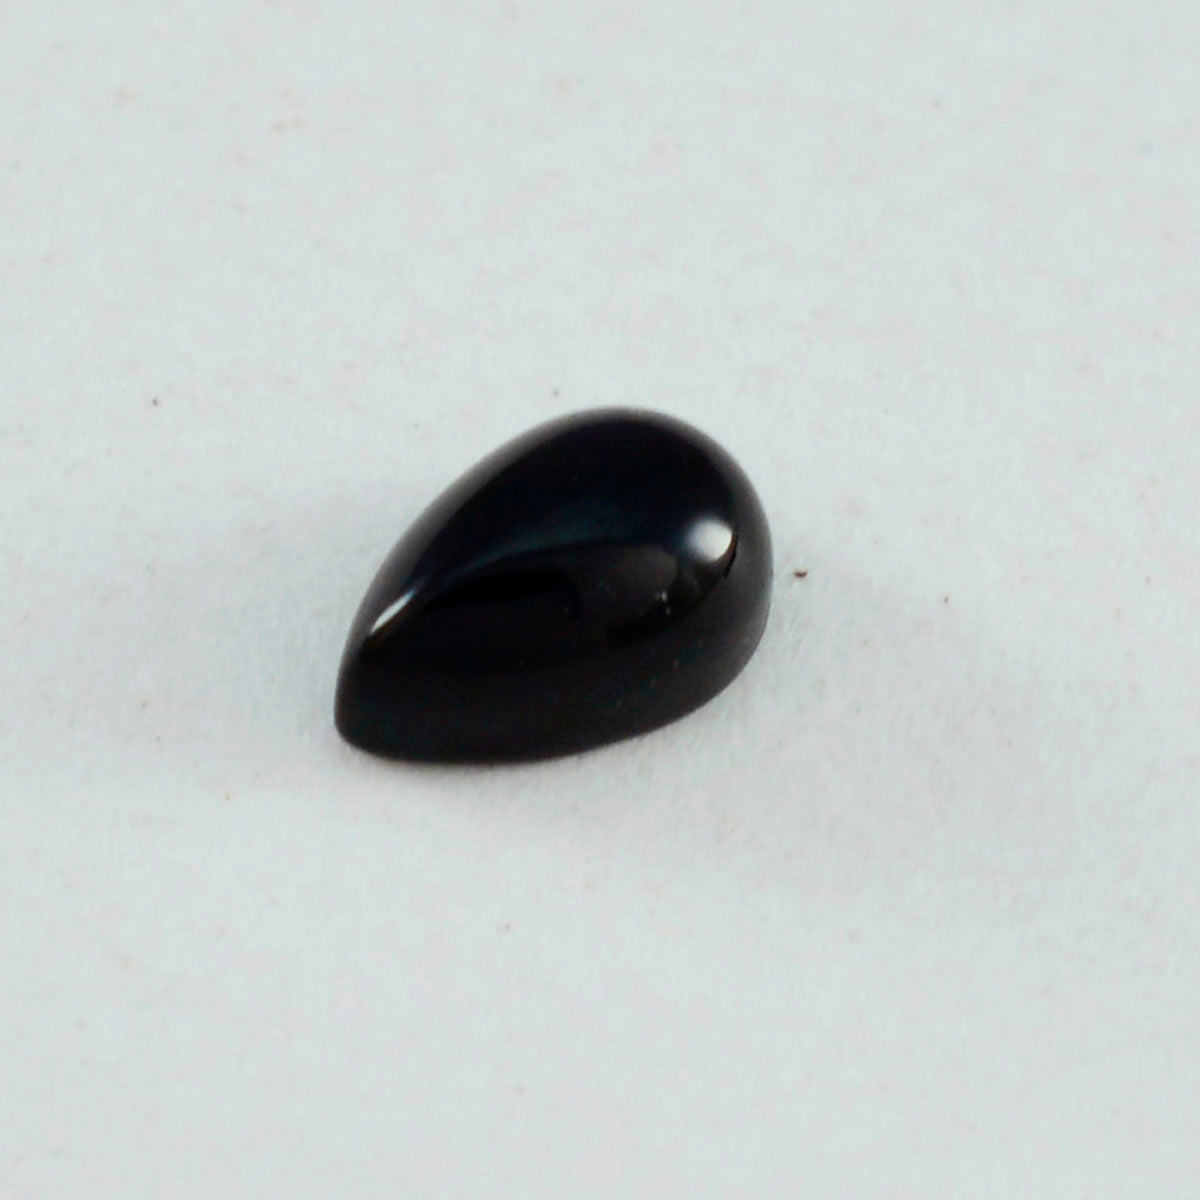 Riyogems 1PC Black Onyx Cabochon 7x10 mm Pear Shape amazing Quality Gem